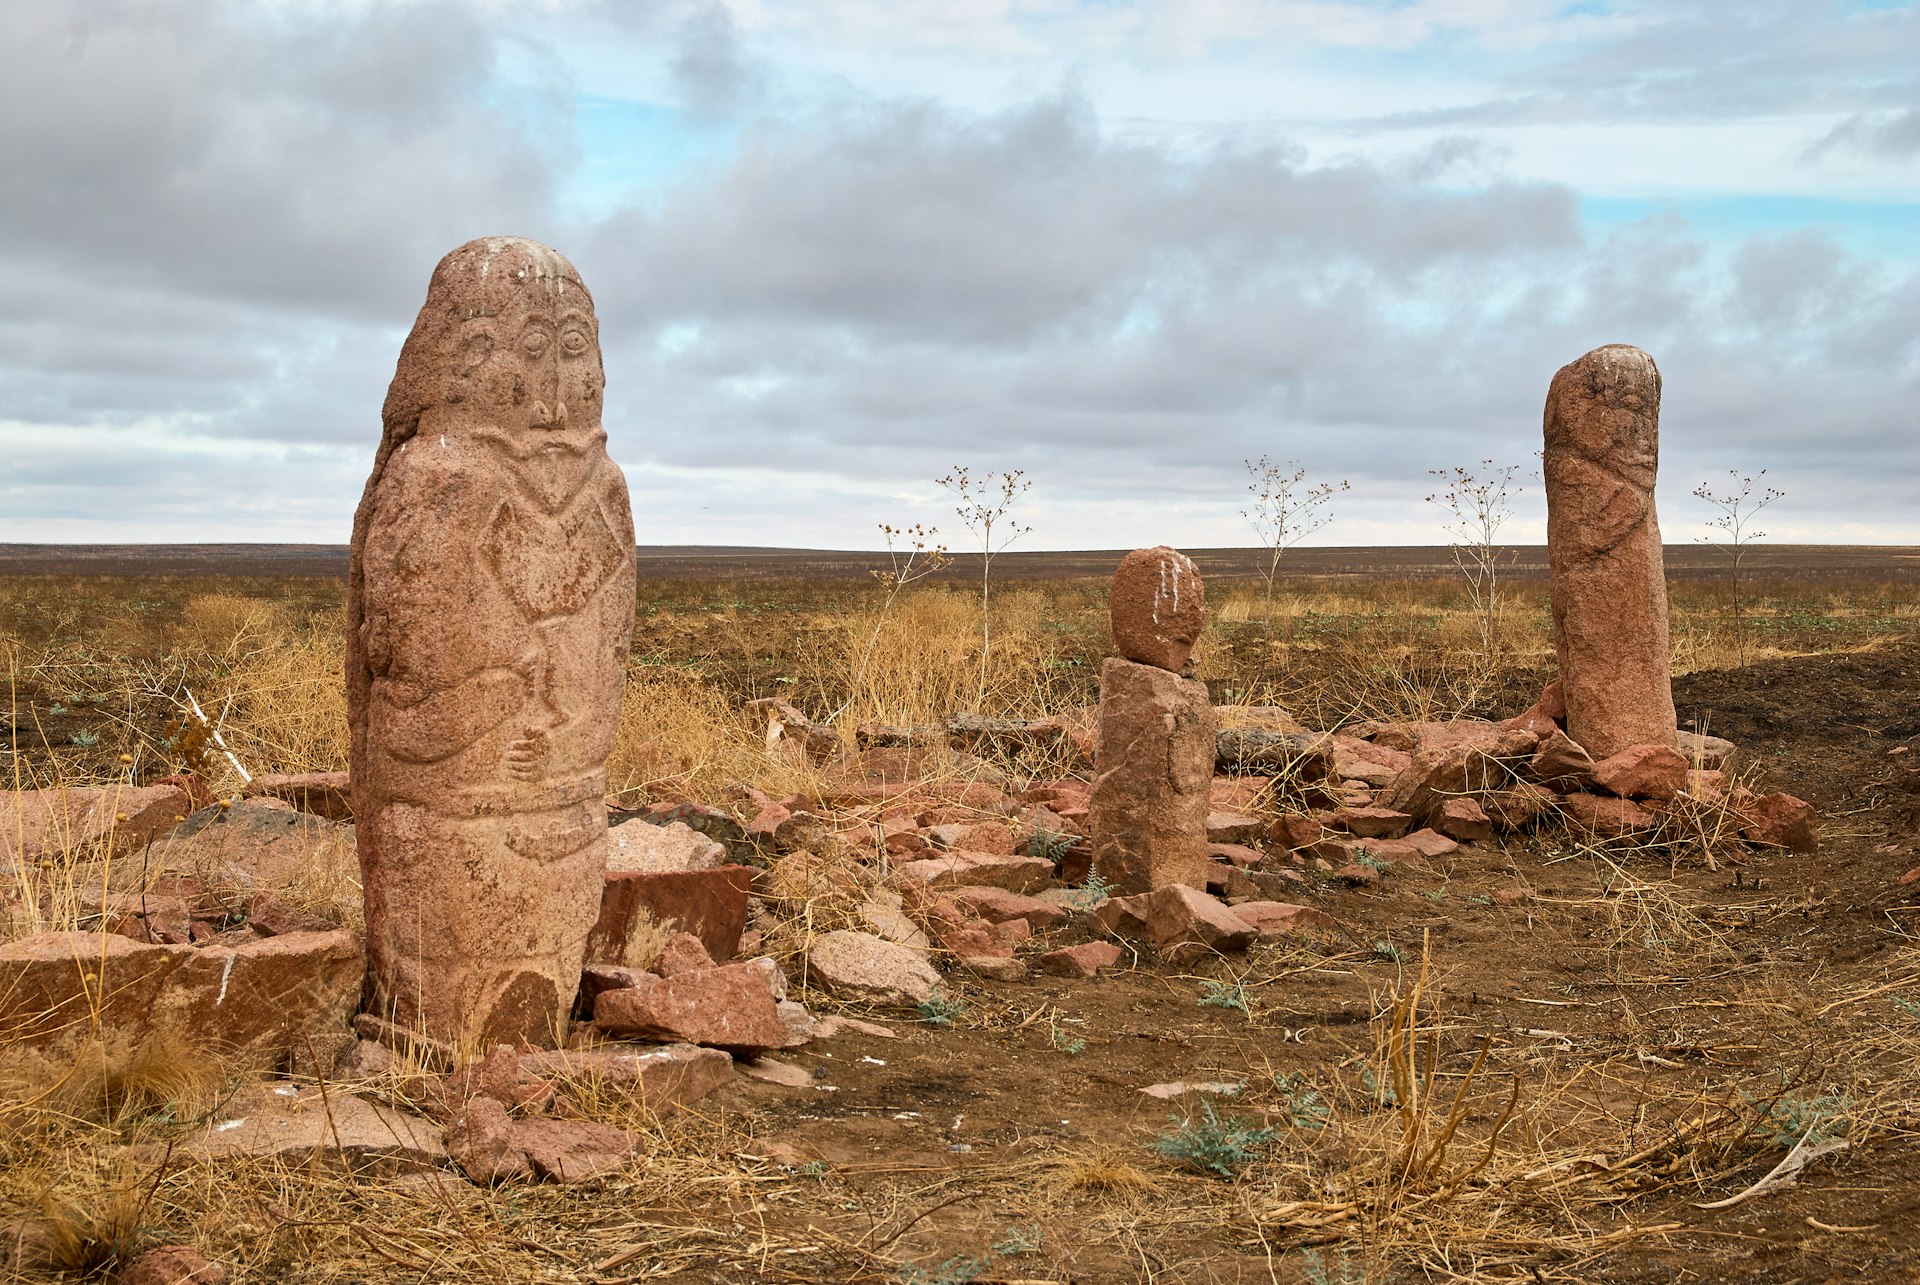 Balbal statues making burial mounts at Zhaisan, Kazakhstan